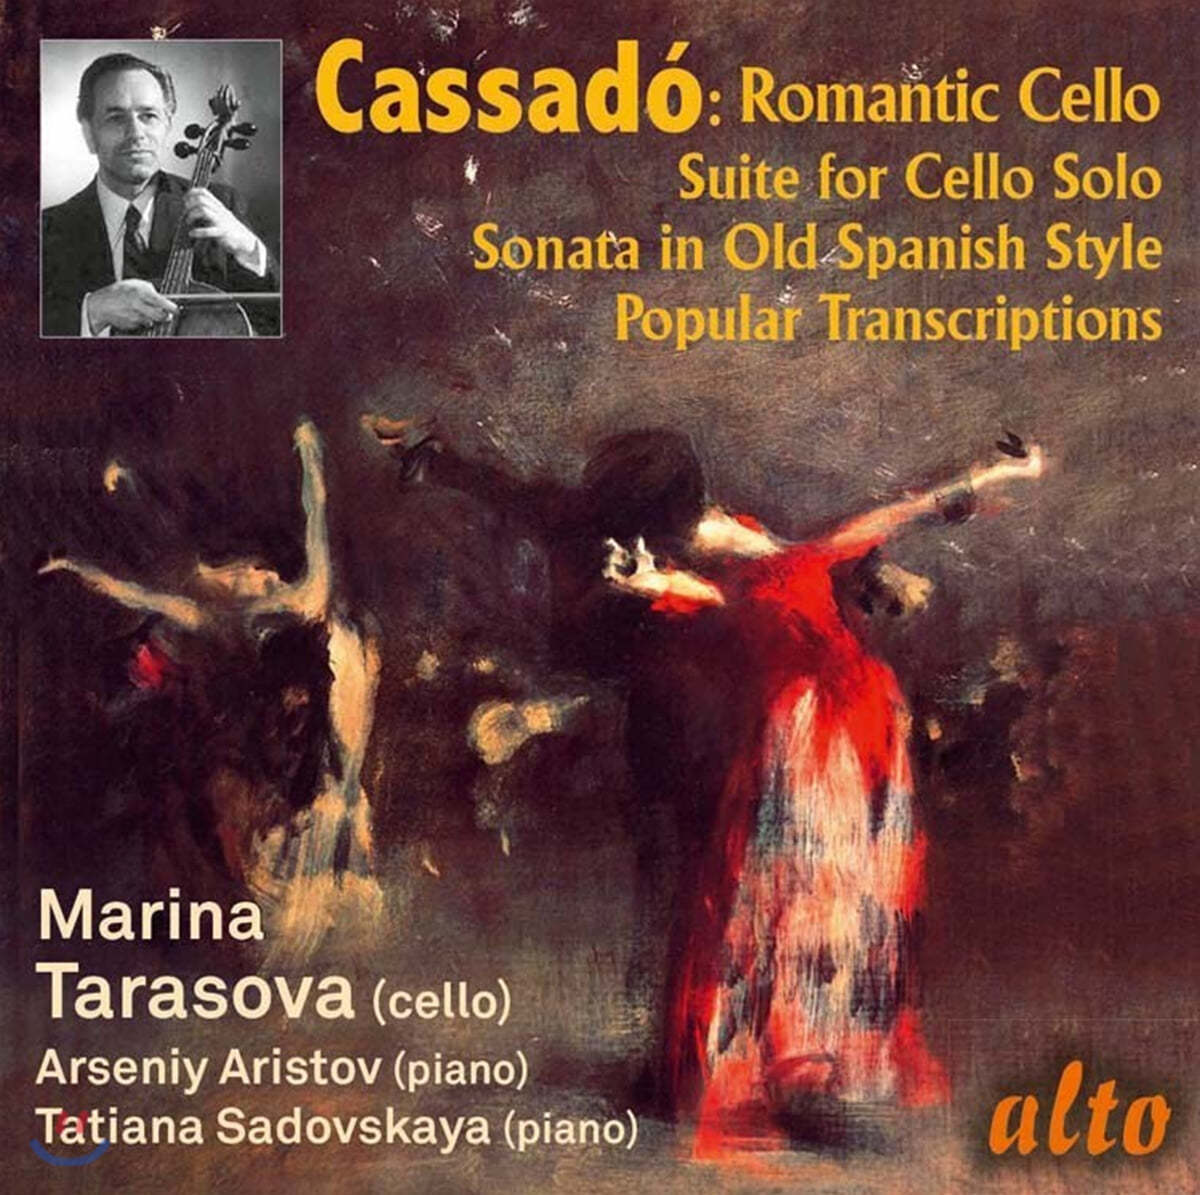 Marina Tarasova 가스파르 카사도: 첼로 작품집, 편곡집 (Gaspar Cassado: Works, Transcriptions for Cello)